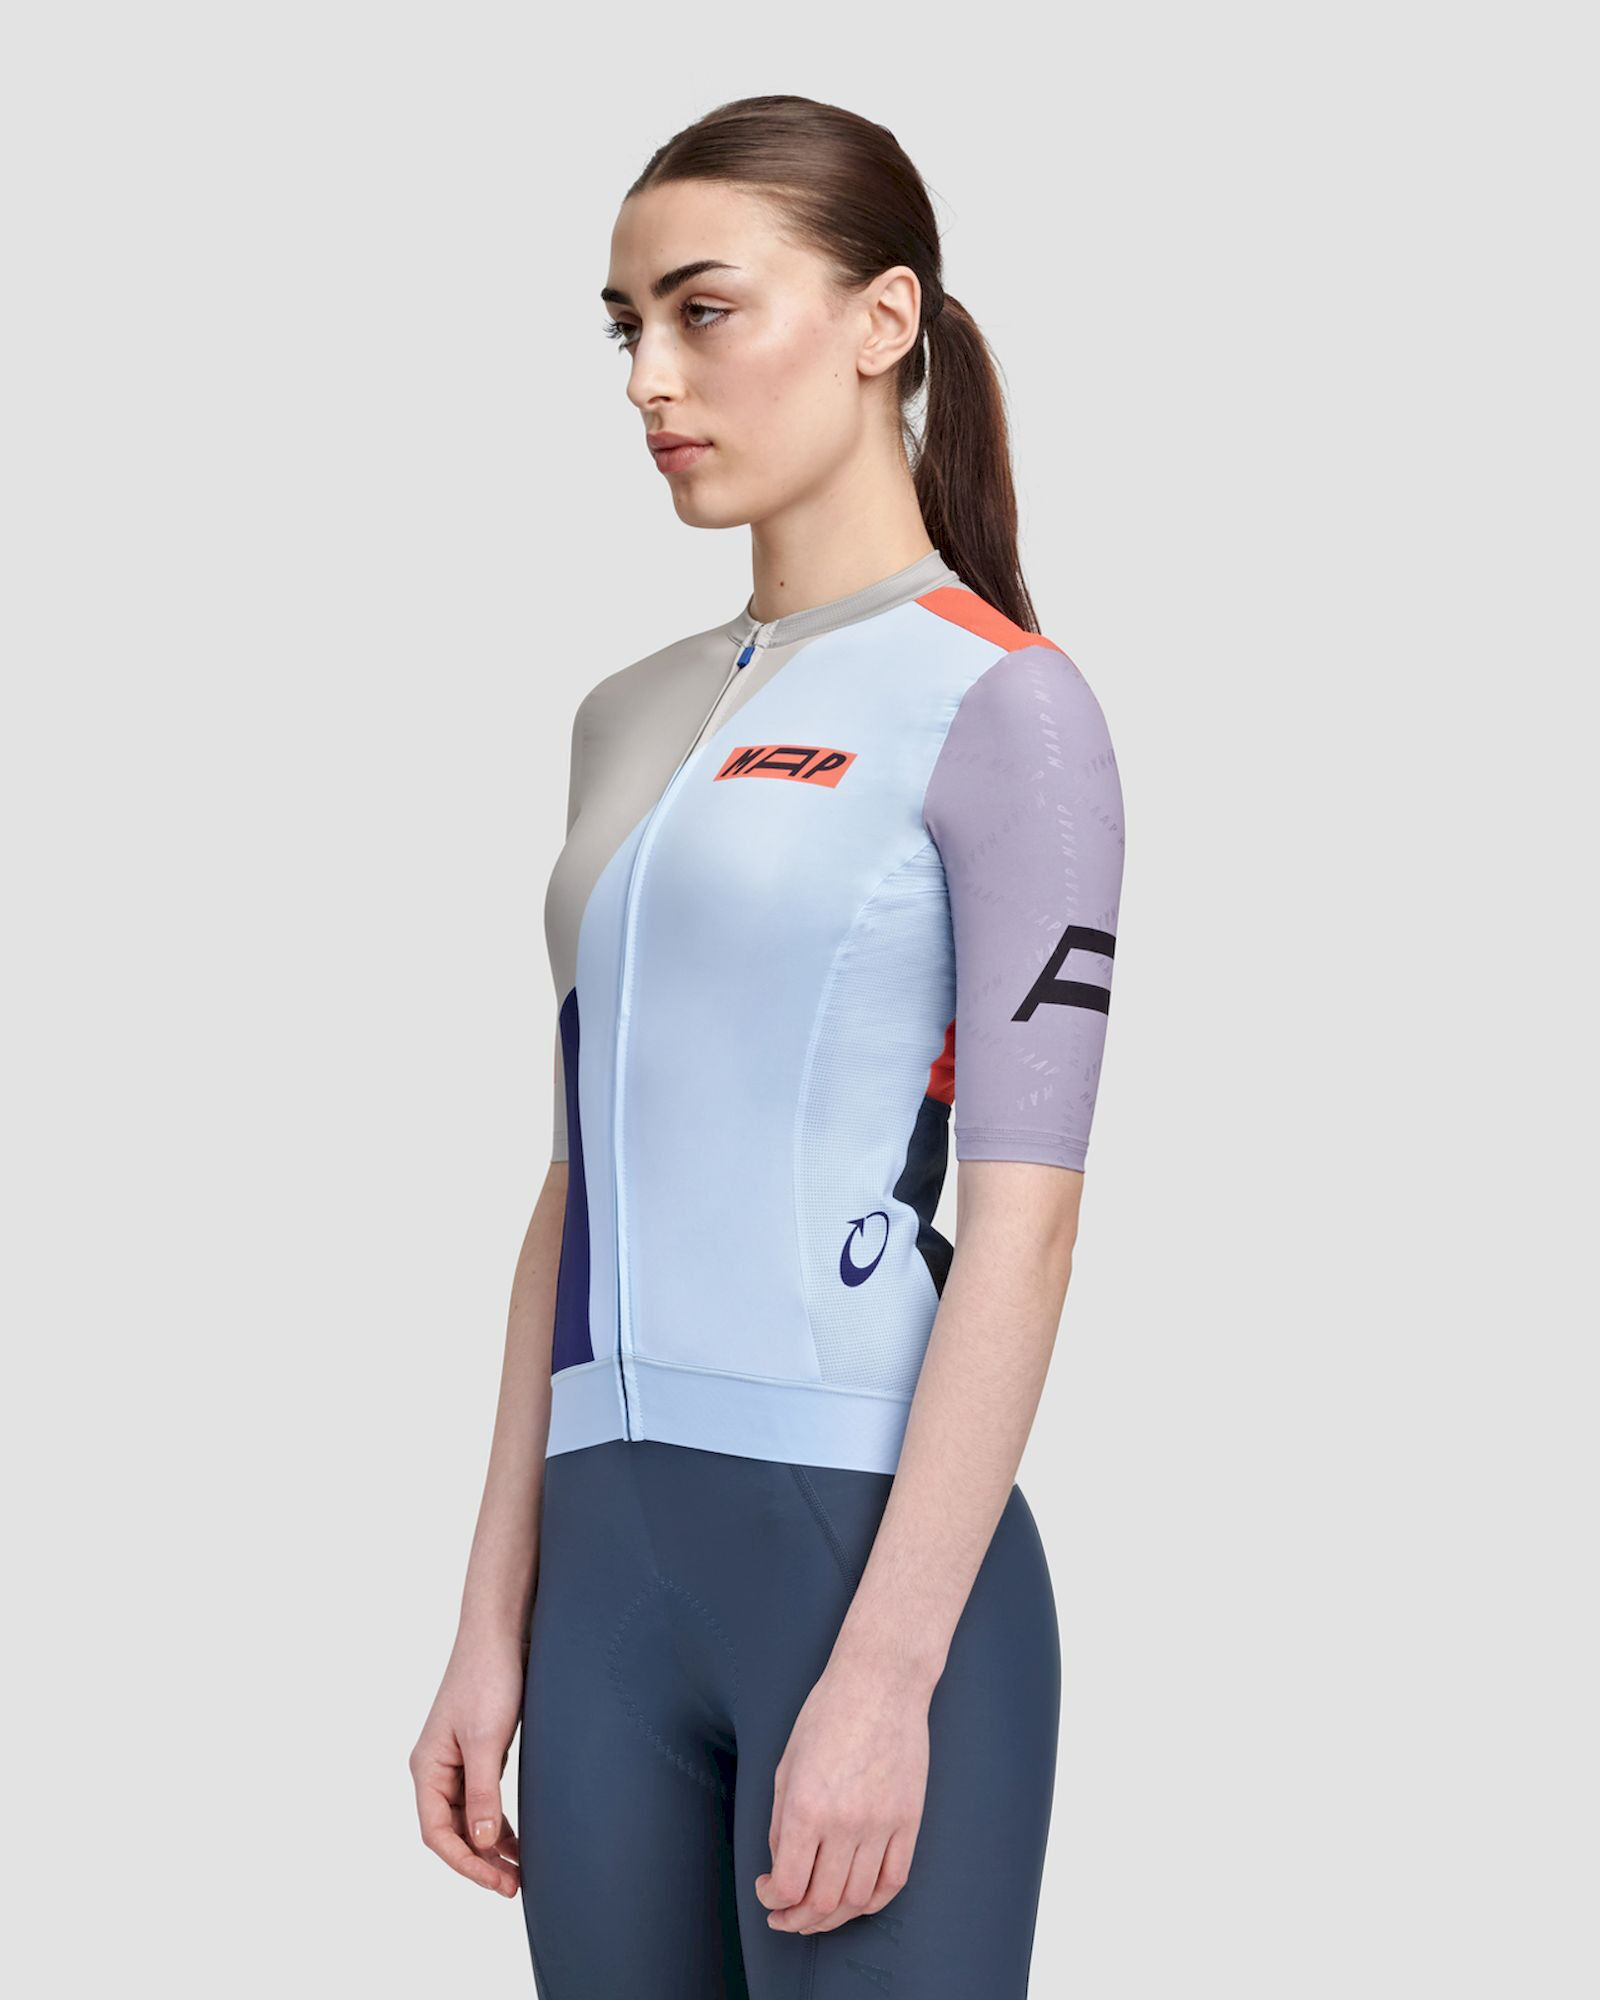 Maap Women's Form Pro Hex Jersey - Maillot vélo femme | Hardloop